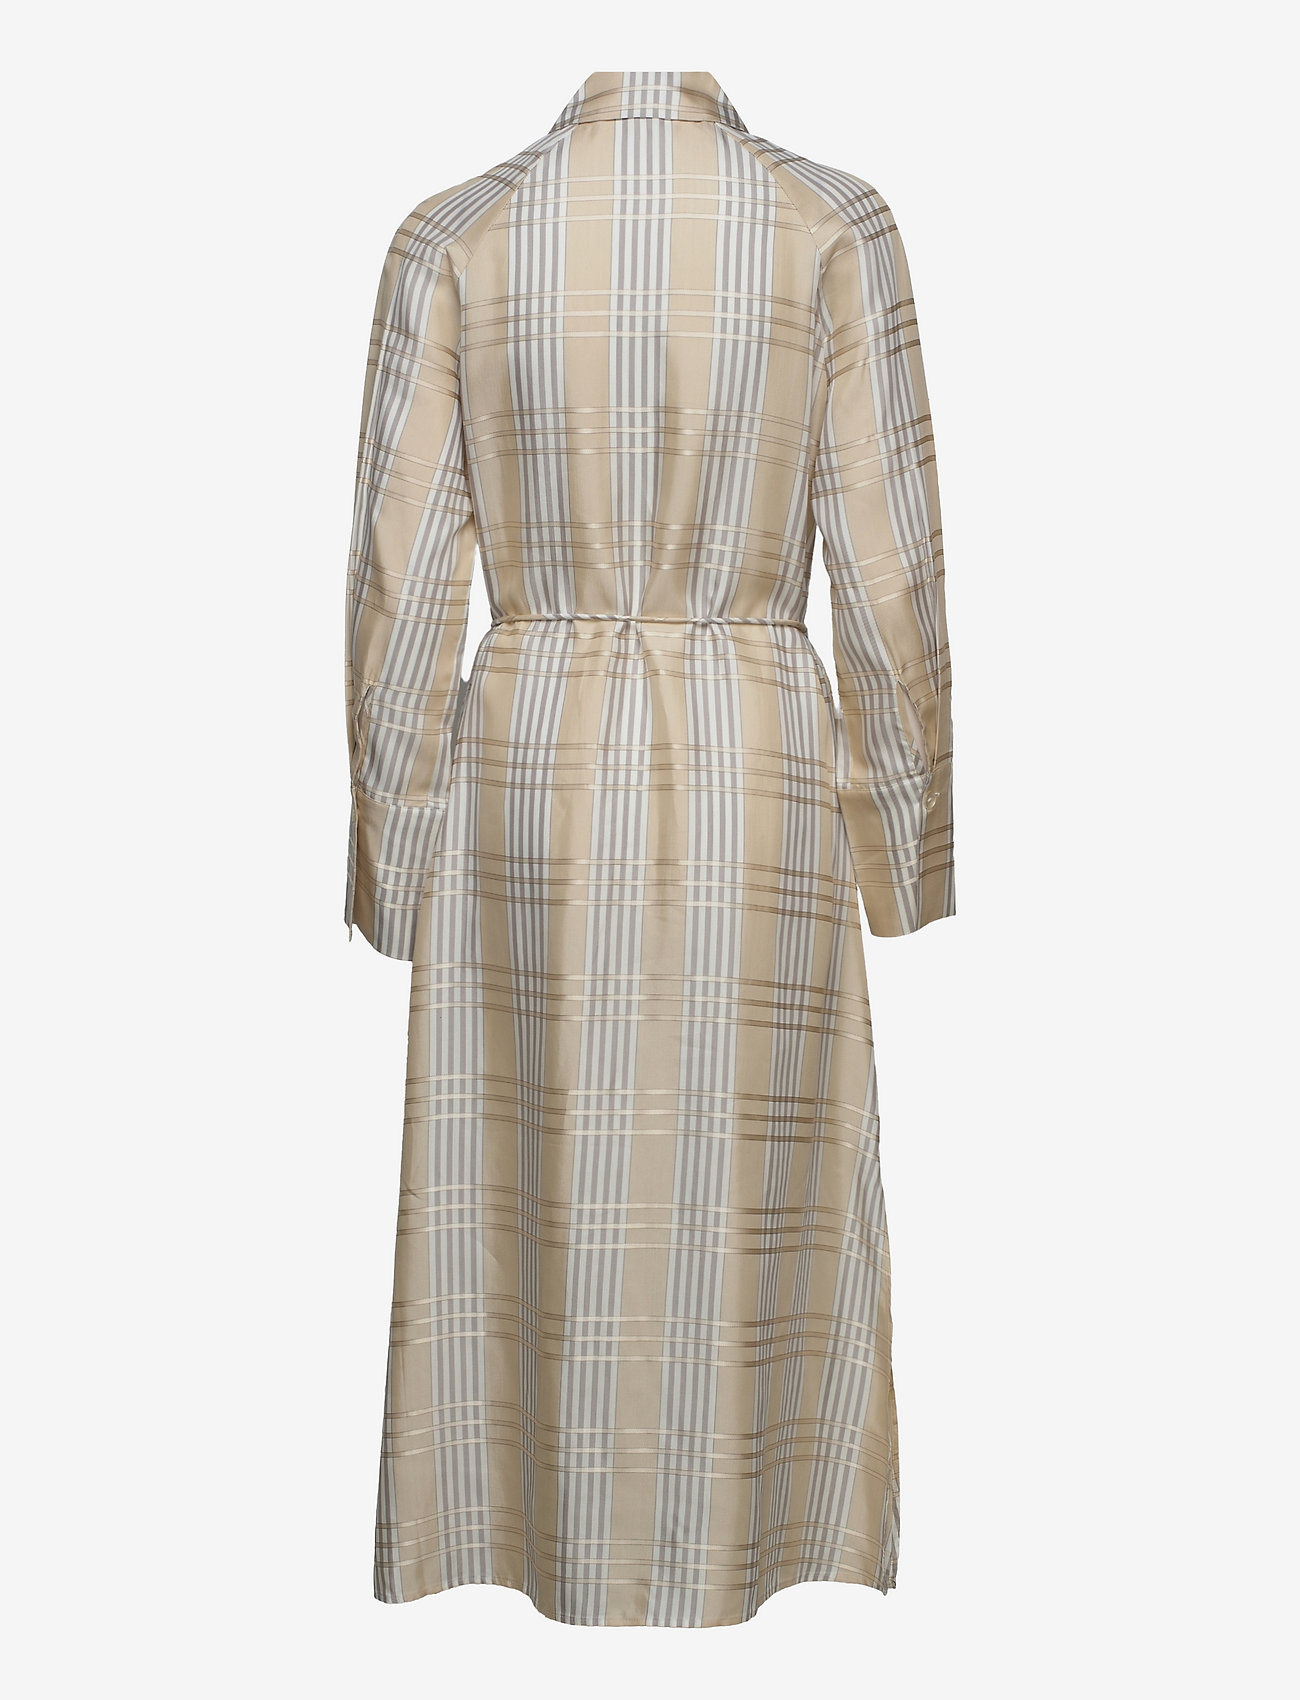 IVY OAK - DAPHNE DRESS SHORT ANKLE LENGTH - marškinių tipo suknelės - beige check - 1